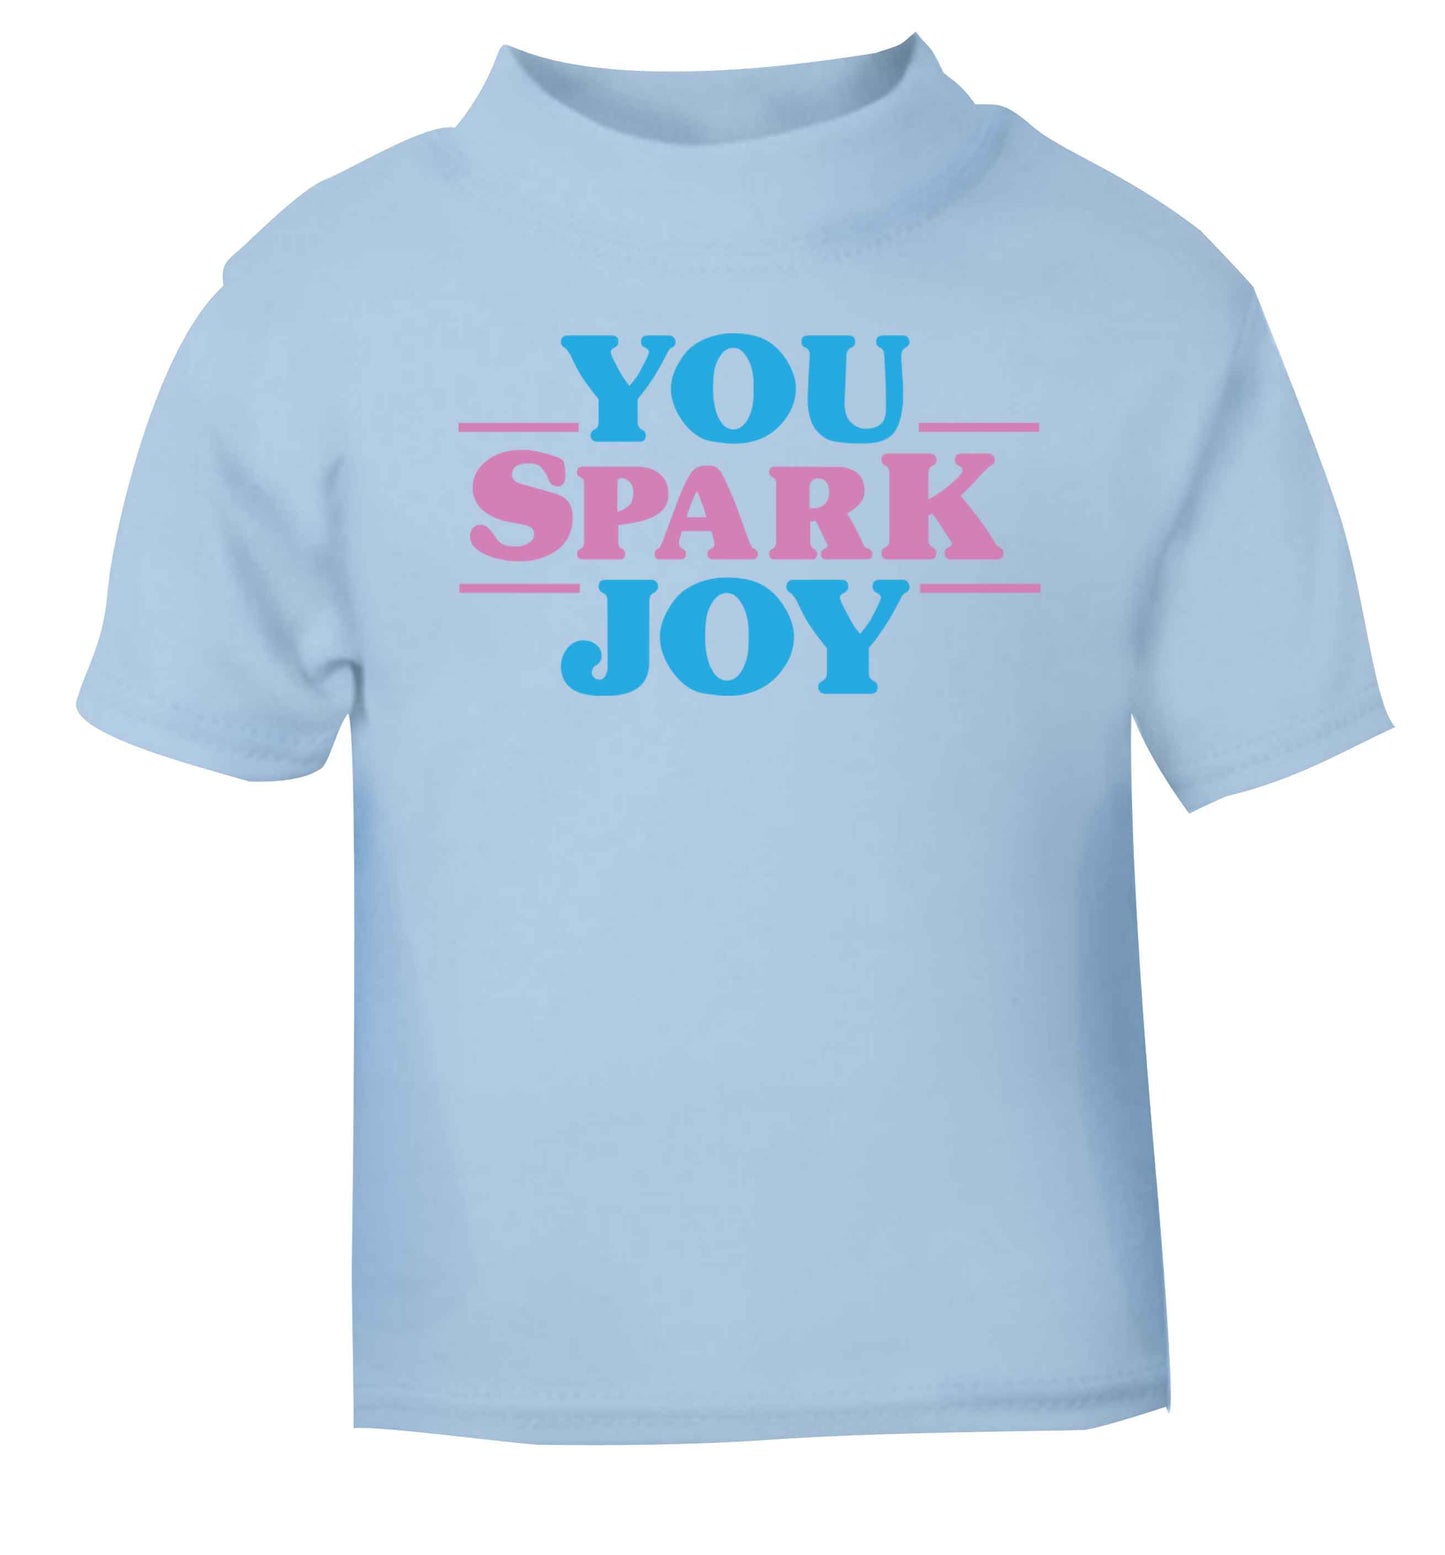 You spark joy light blue baby toddler Tshirt 2 Years